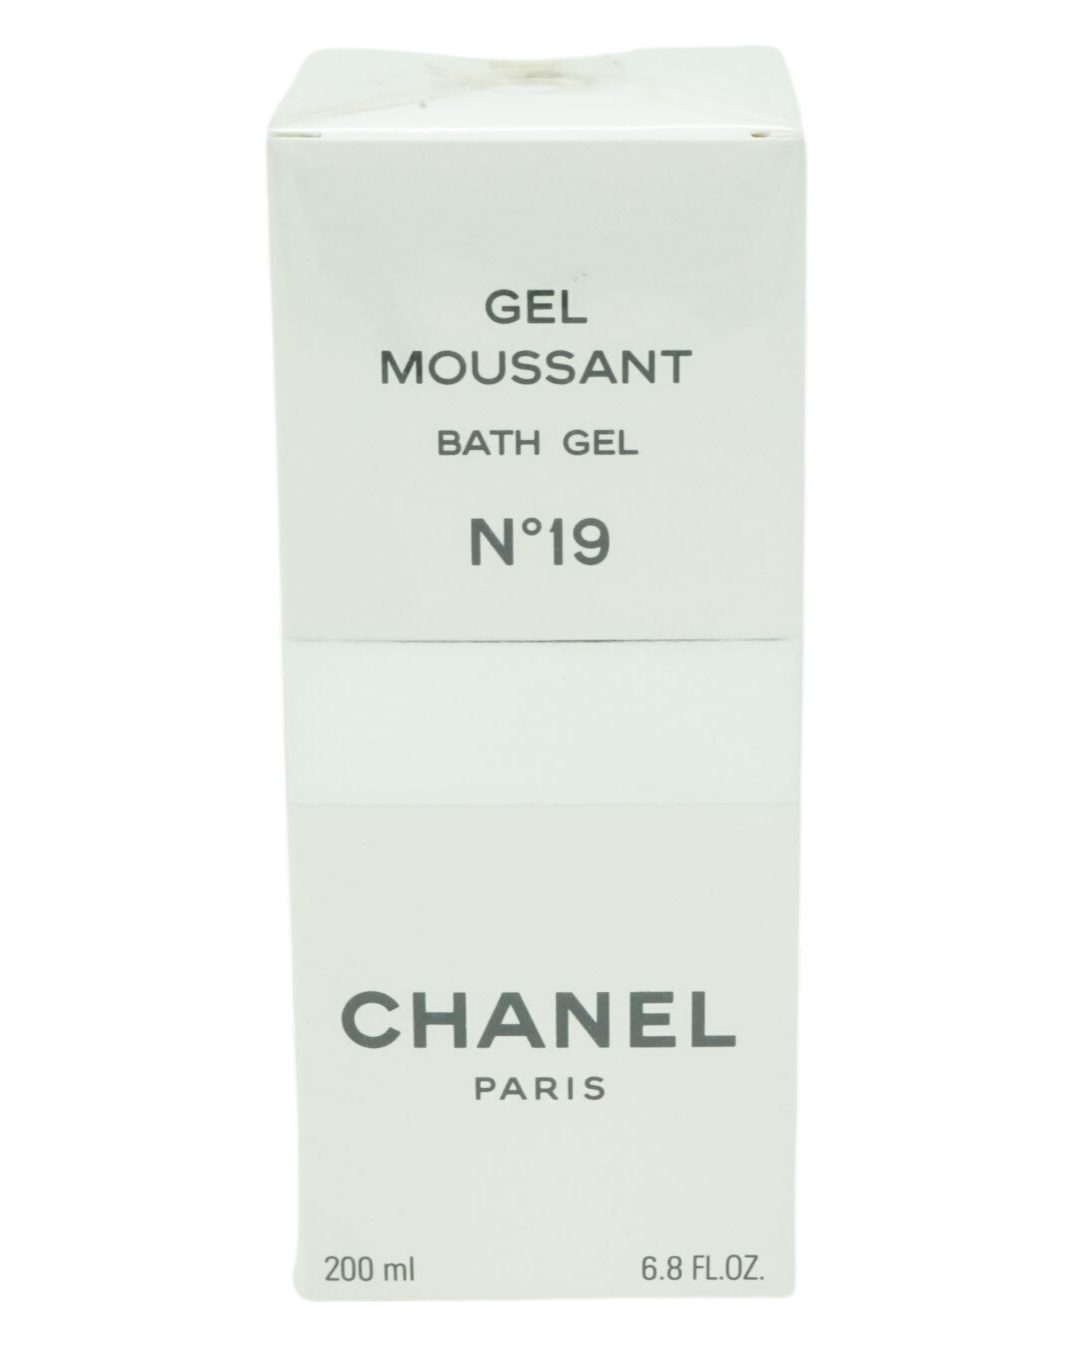 Moussant 200ml Chanel Gel No Badezusatz CHANEL Gel 19 Bath